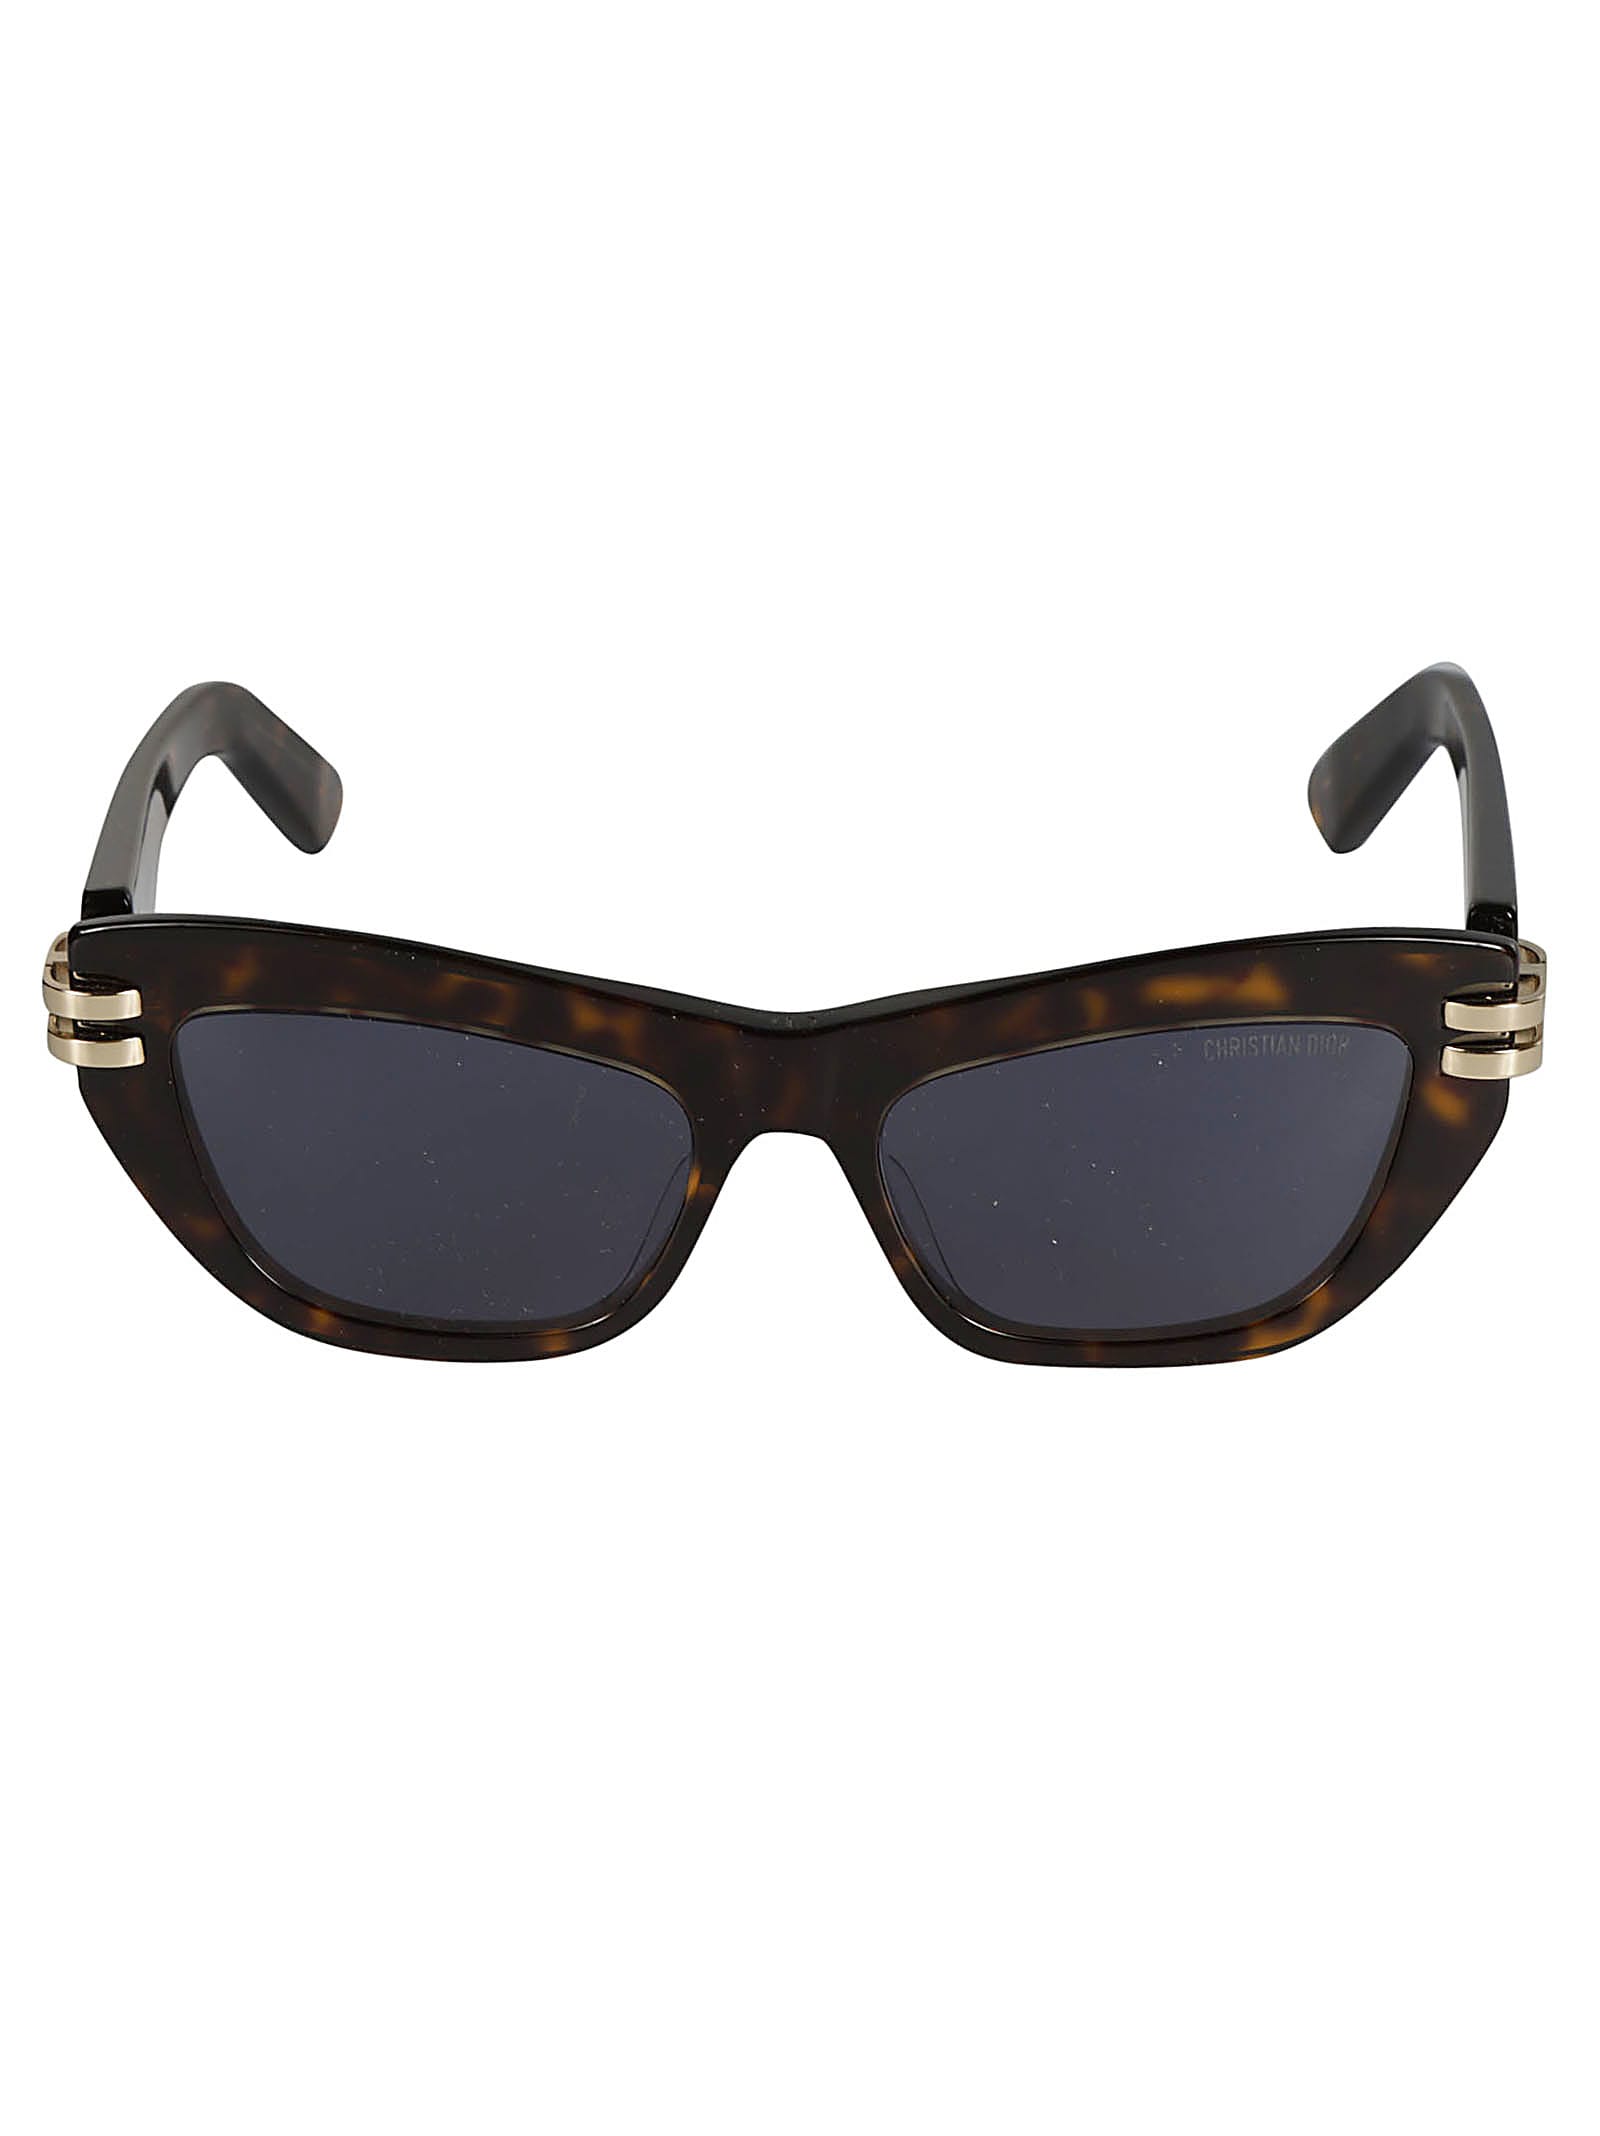 Dior C Sunglasses In Dark Havana / Blue